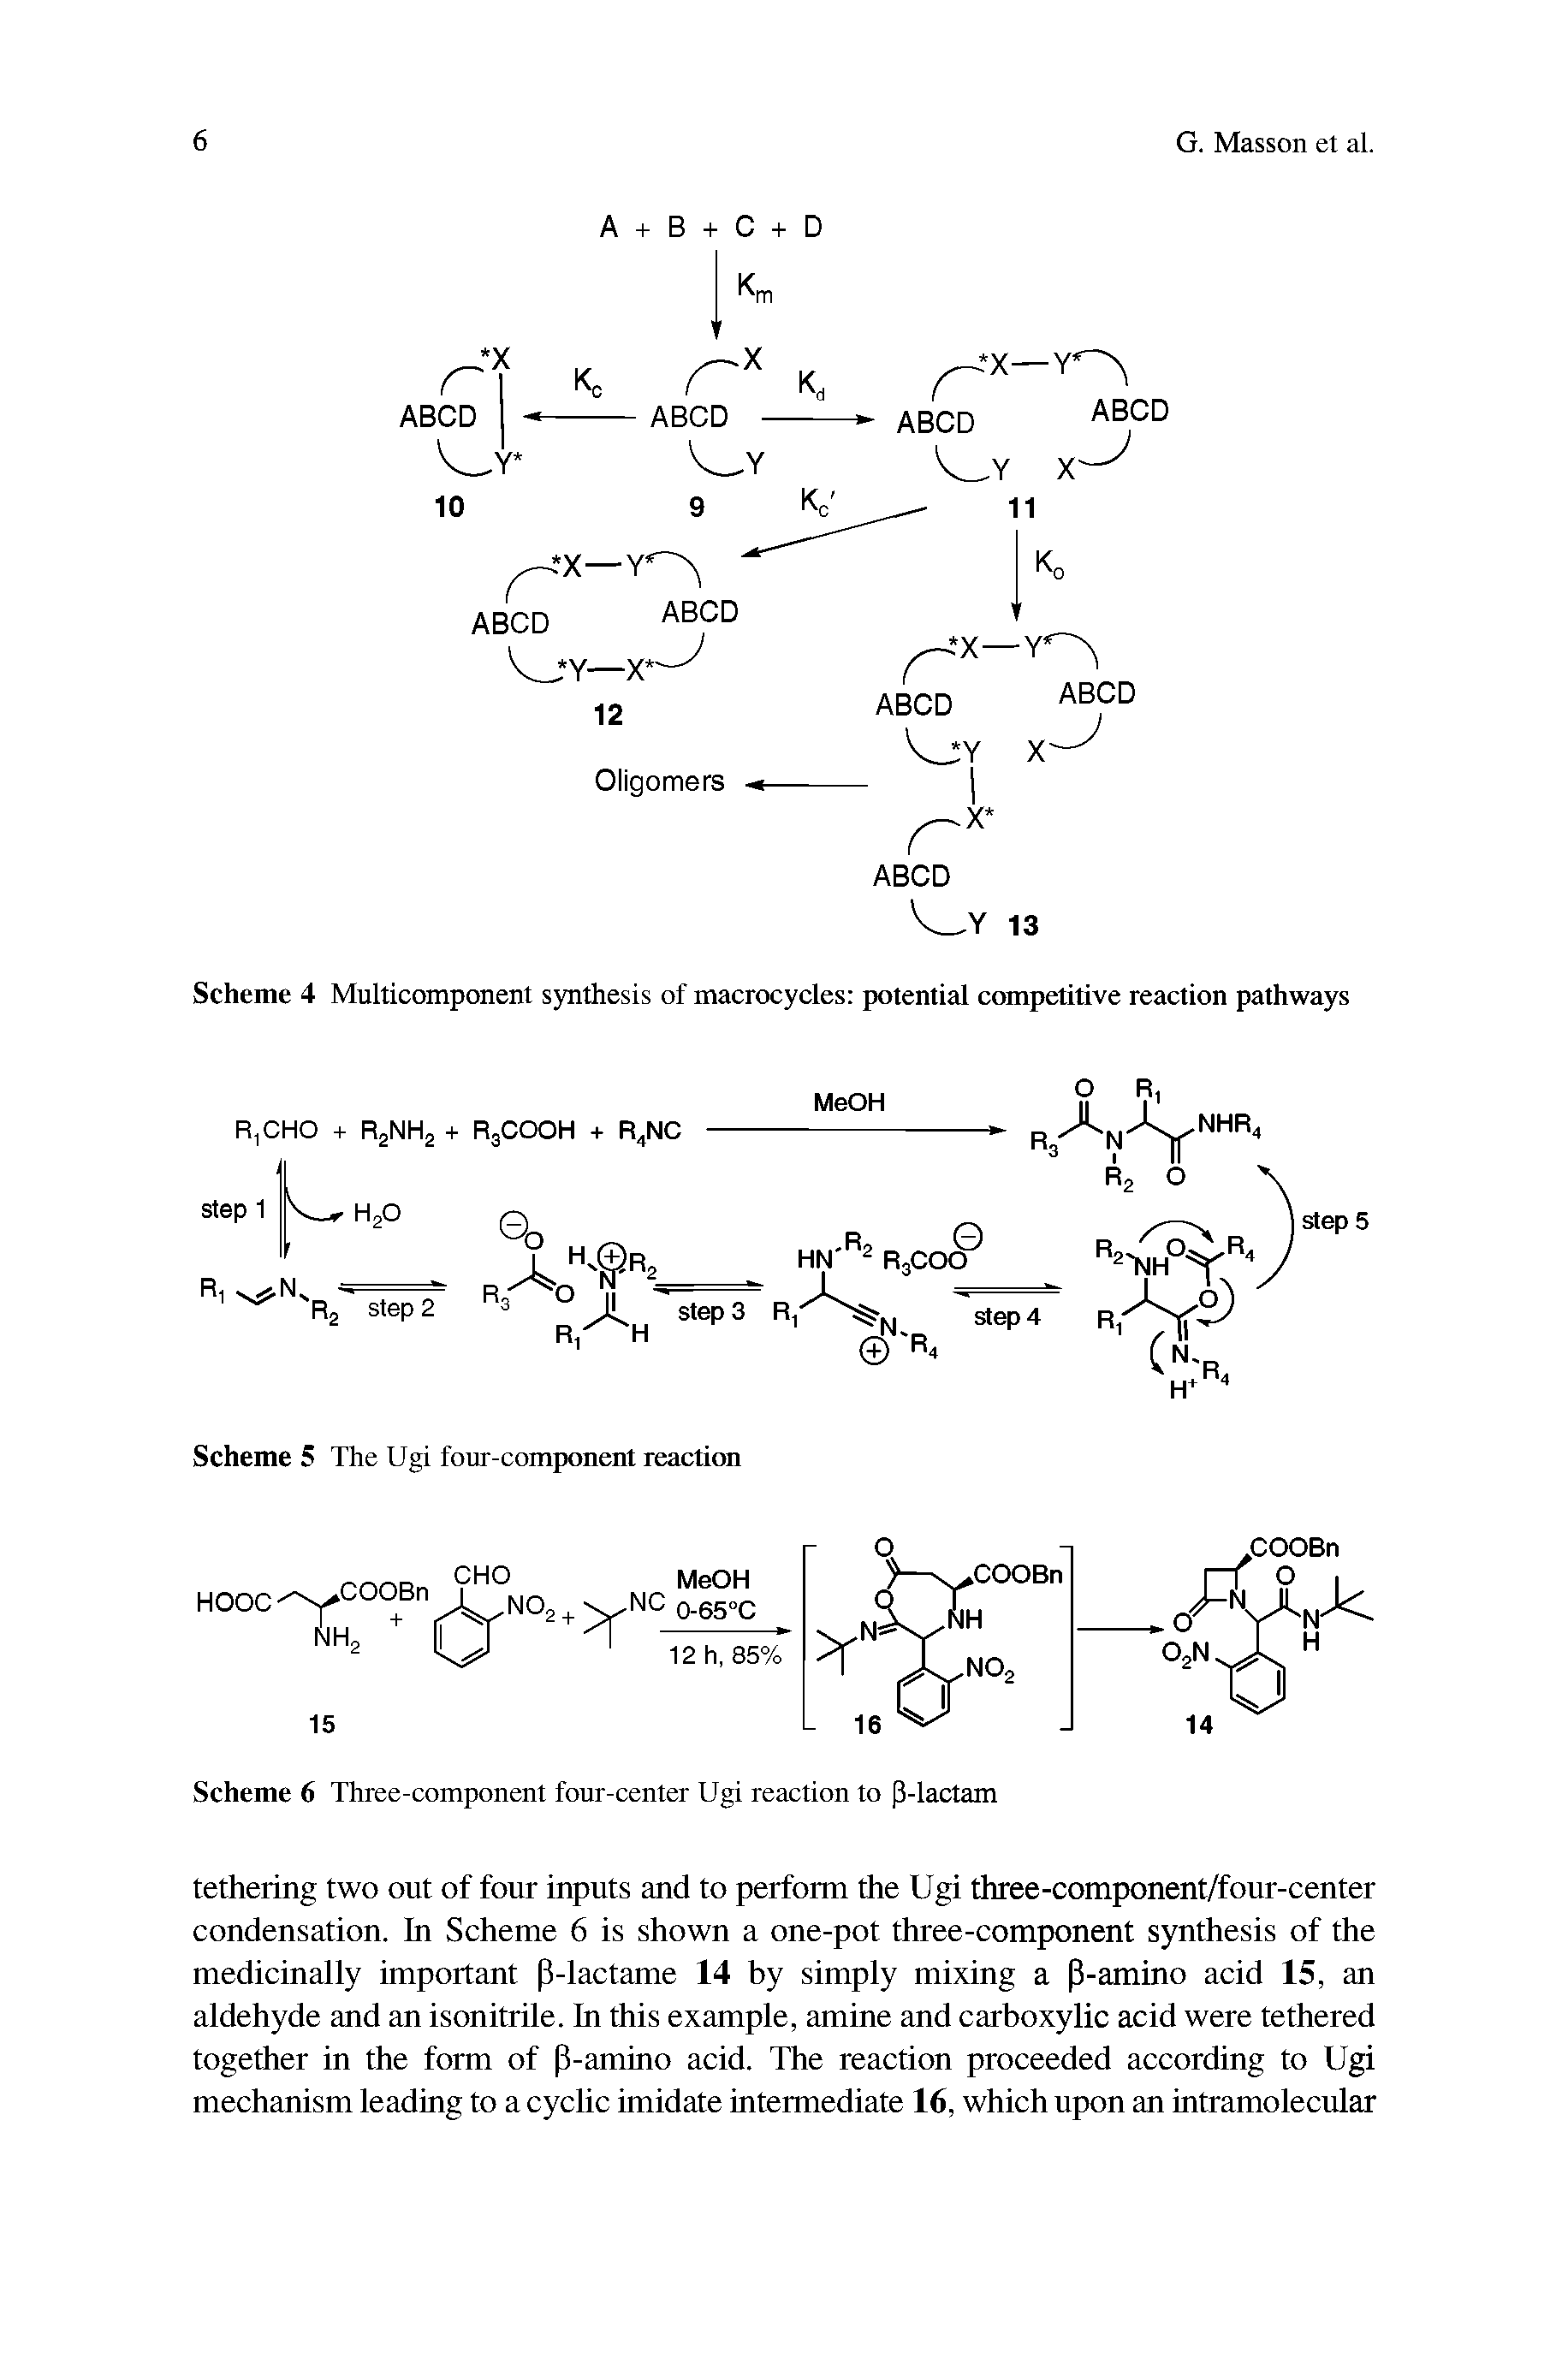 Scheme 6 Three-component four-center Ugi reaction to (3-lactam...